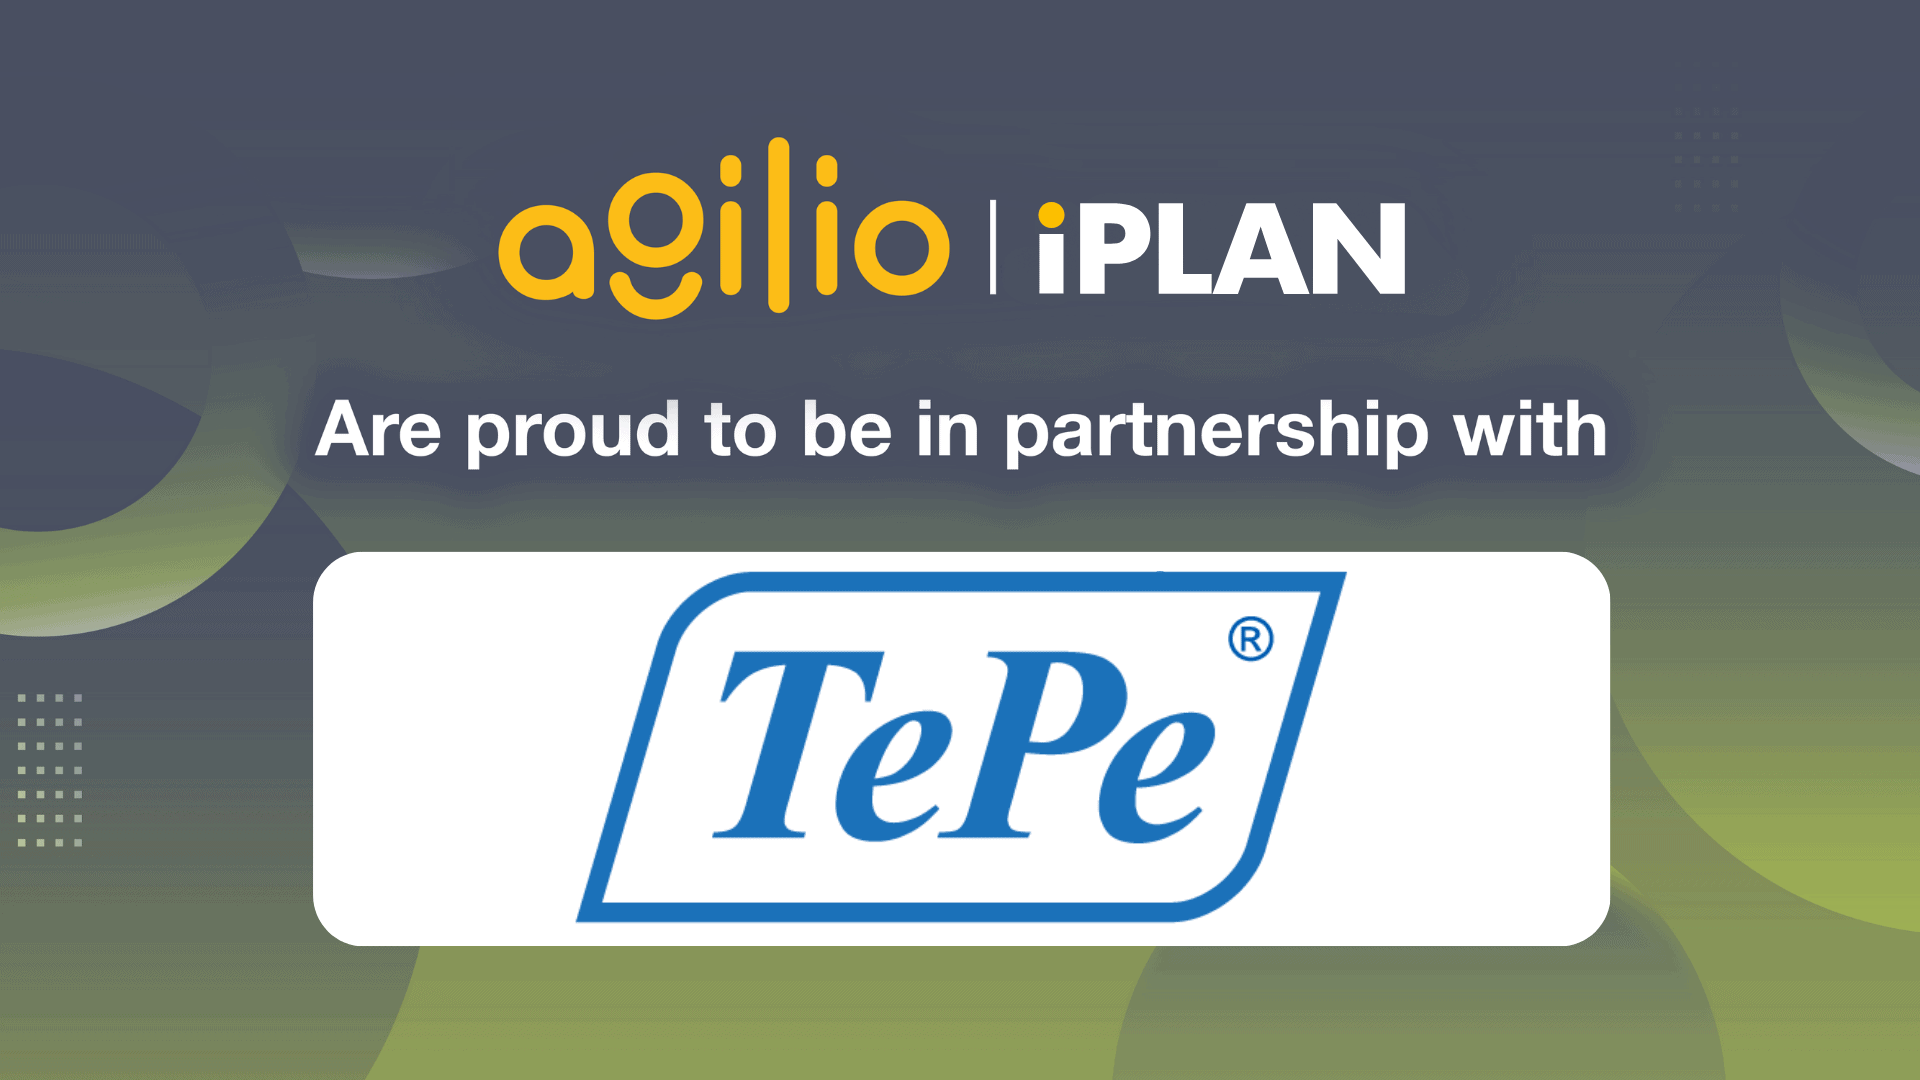 Agilio iPlan and TePe partnership